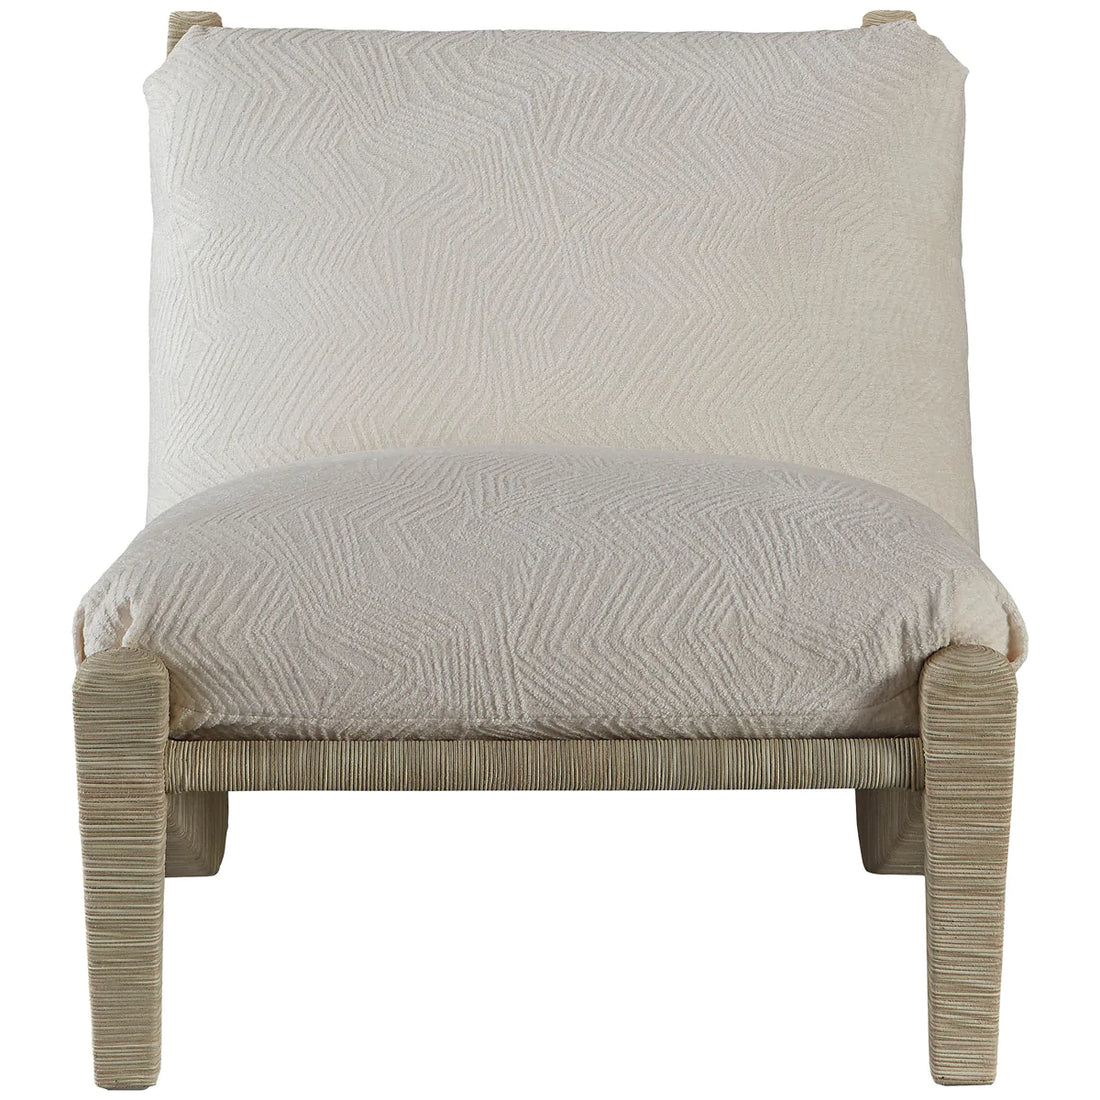 Baker Furniture Lashed Lounge Chair MCU1805C